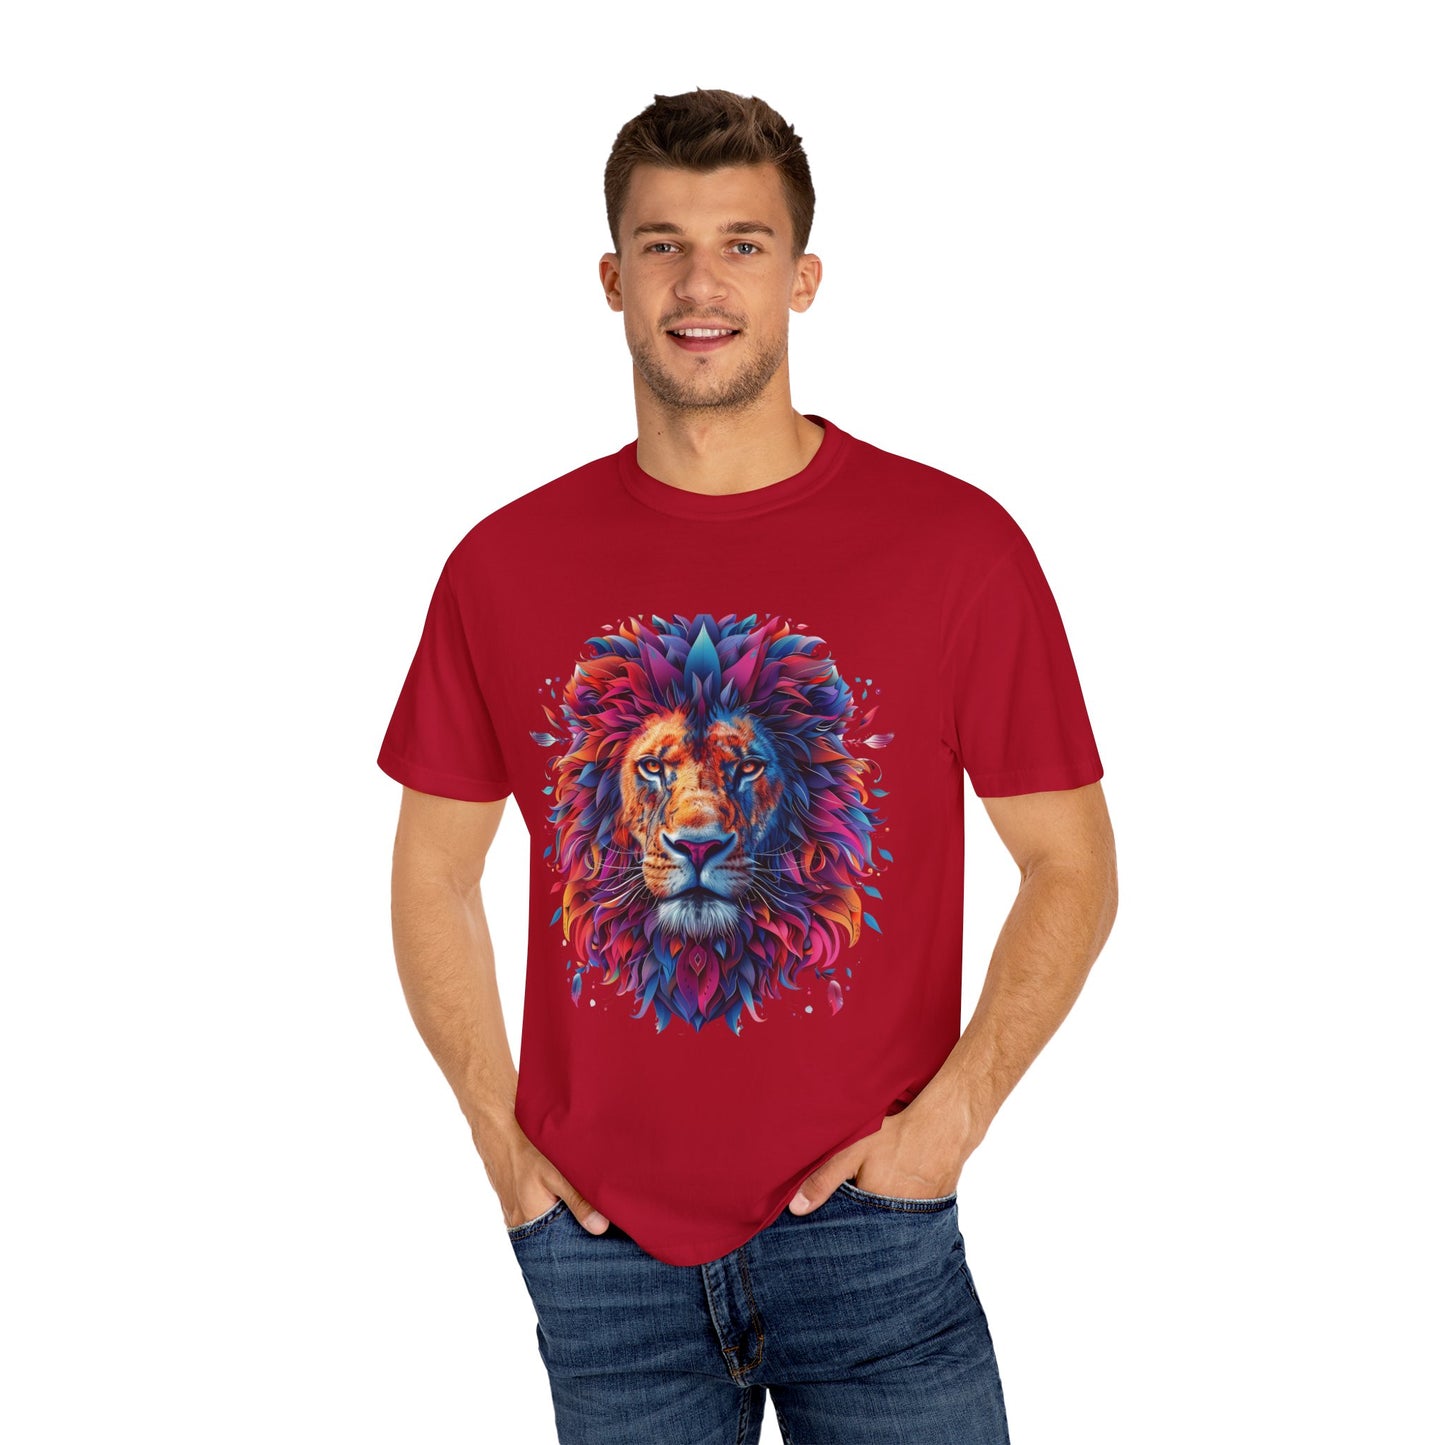 Lion Head Cool Graphic Design Novelty Unisex Garment-dyed T-shirt Cotton Funny Humorous Graphic Soft Premium Unisex Men Women Red T-shirt Birthday Gift-21